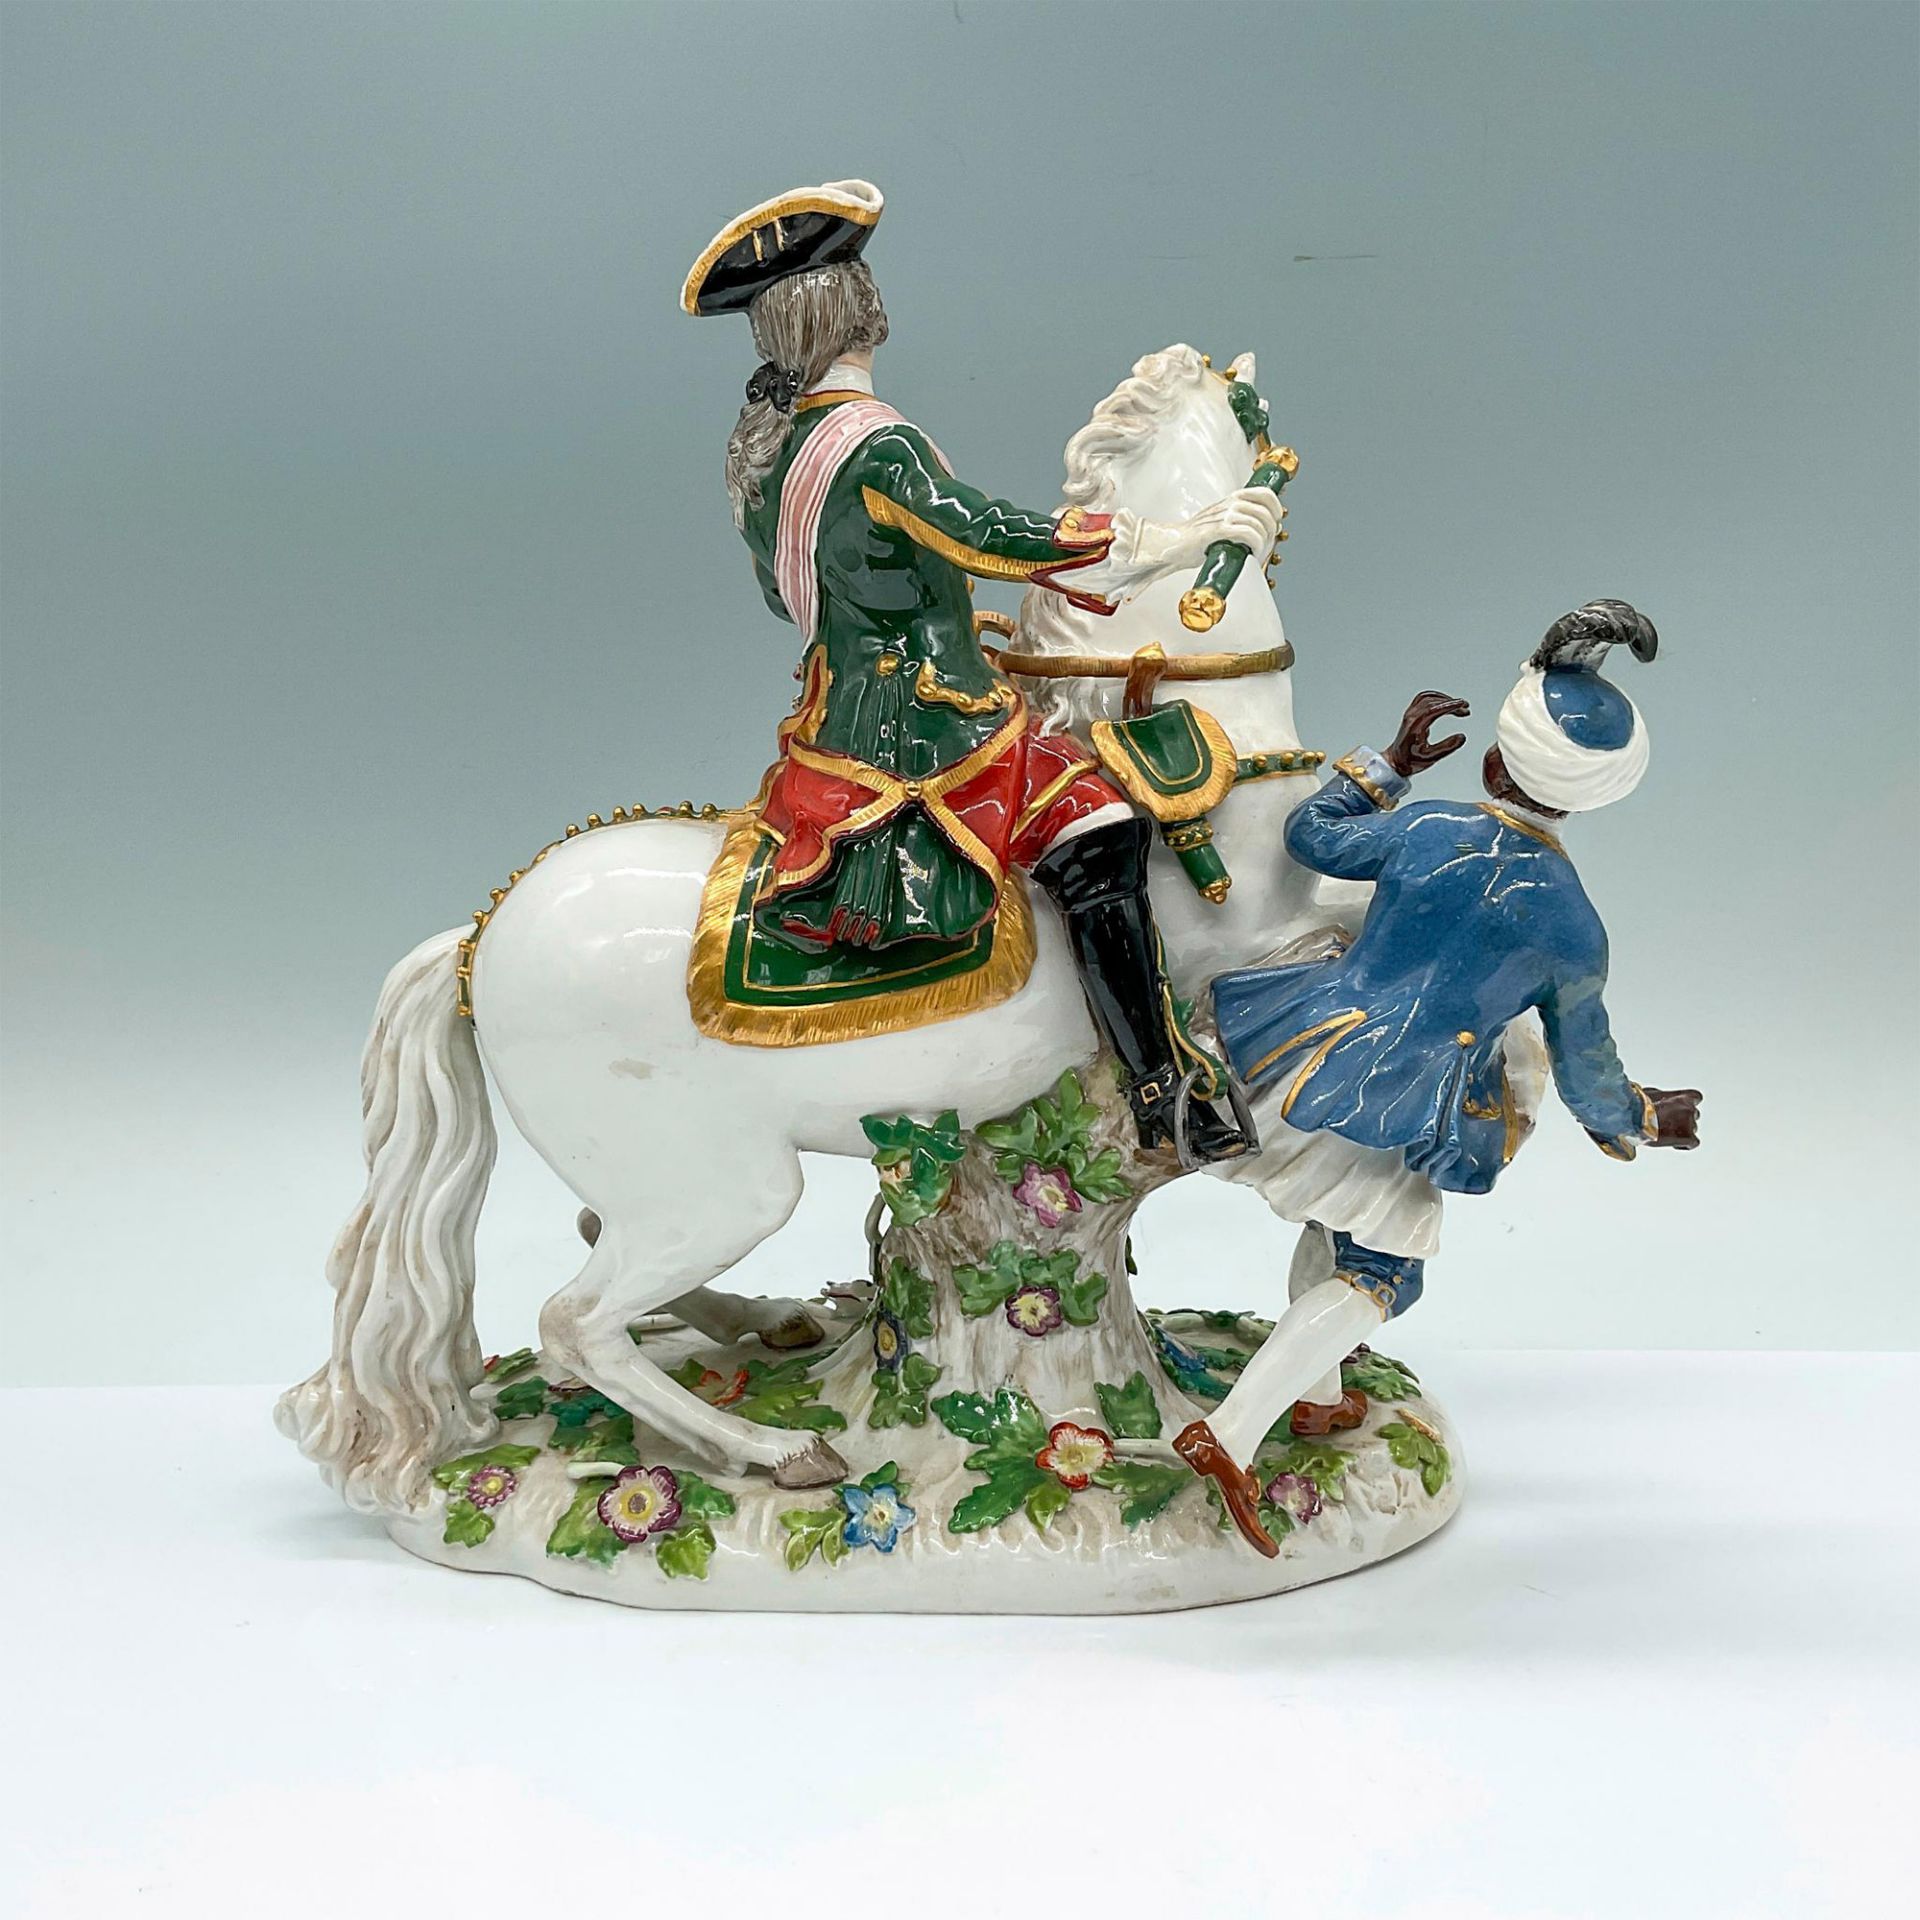 Rare 19th c. Antique Meissen Porcelain Figurine, Tsarina Elizabeth II - Image 2 of 3